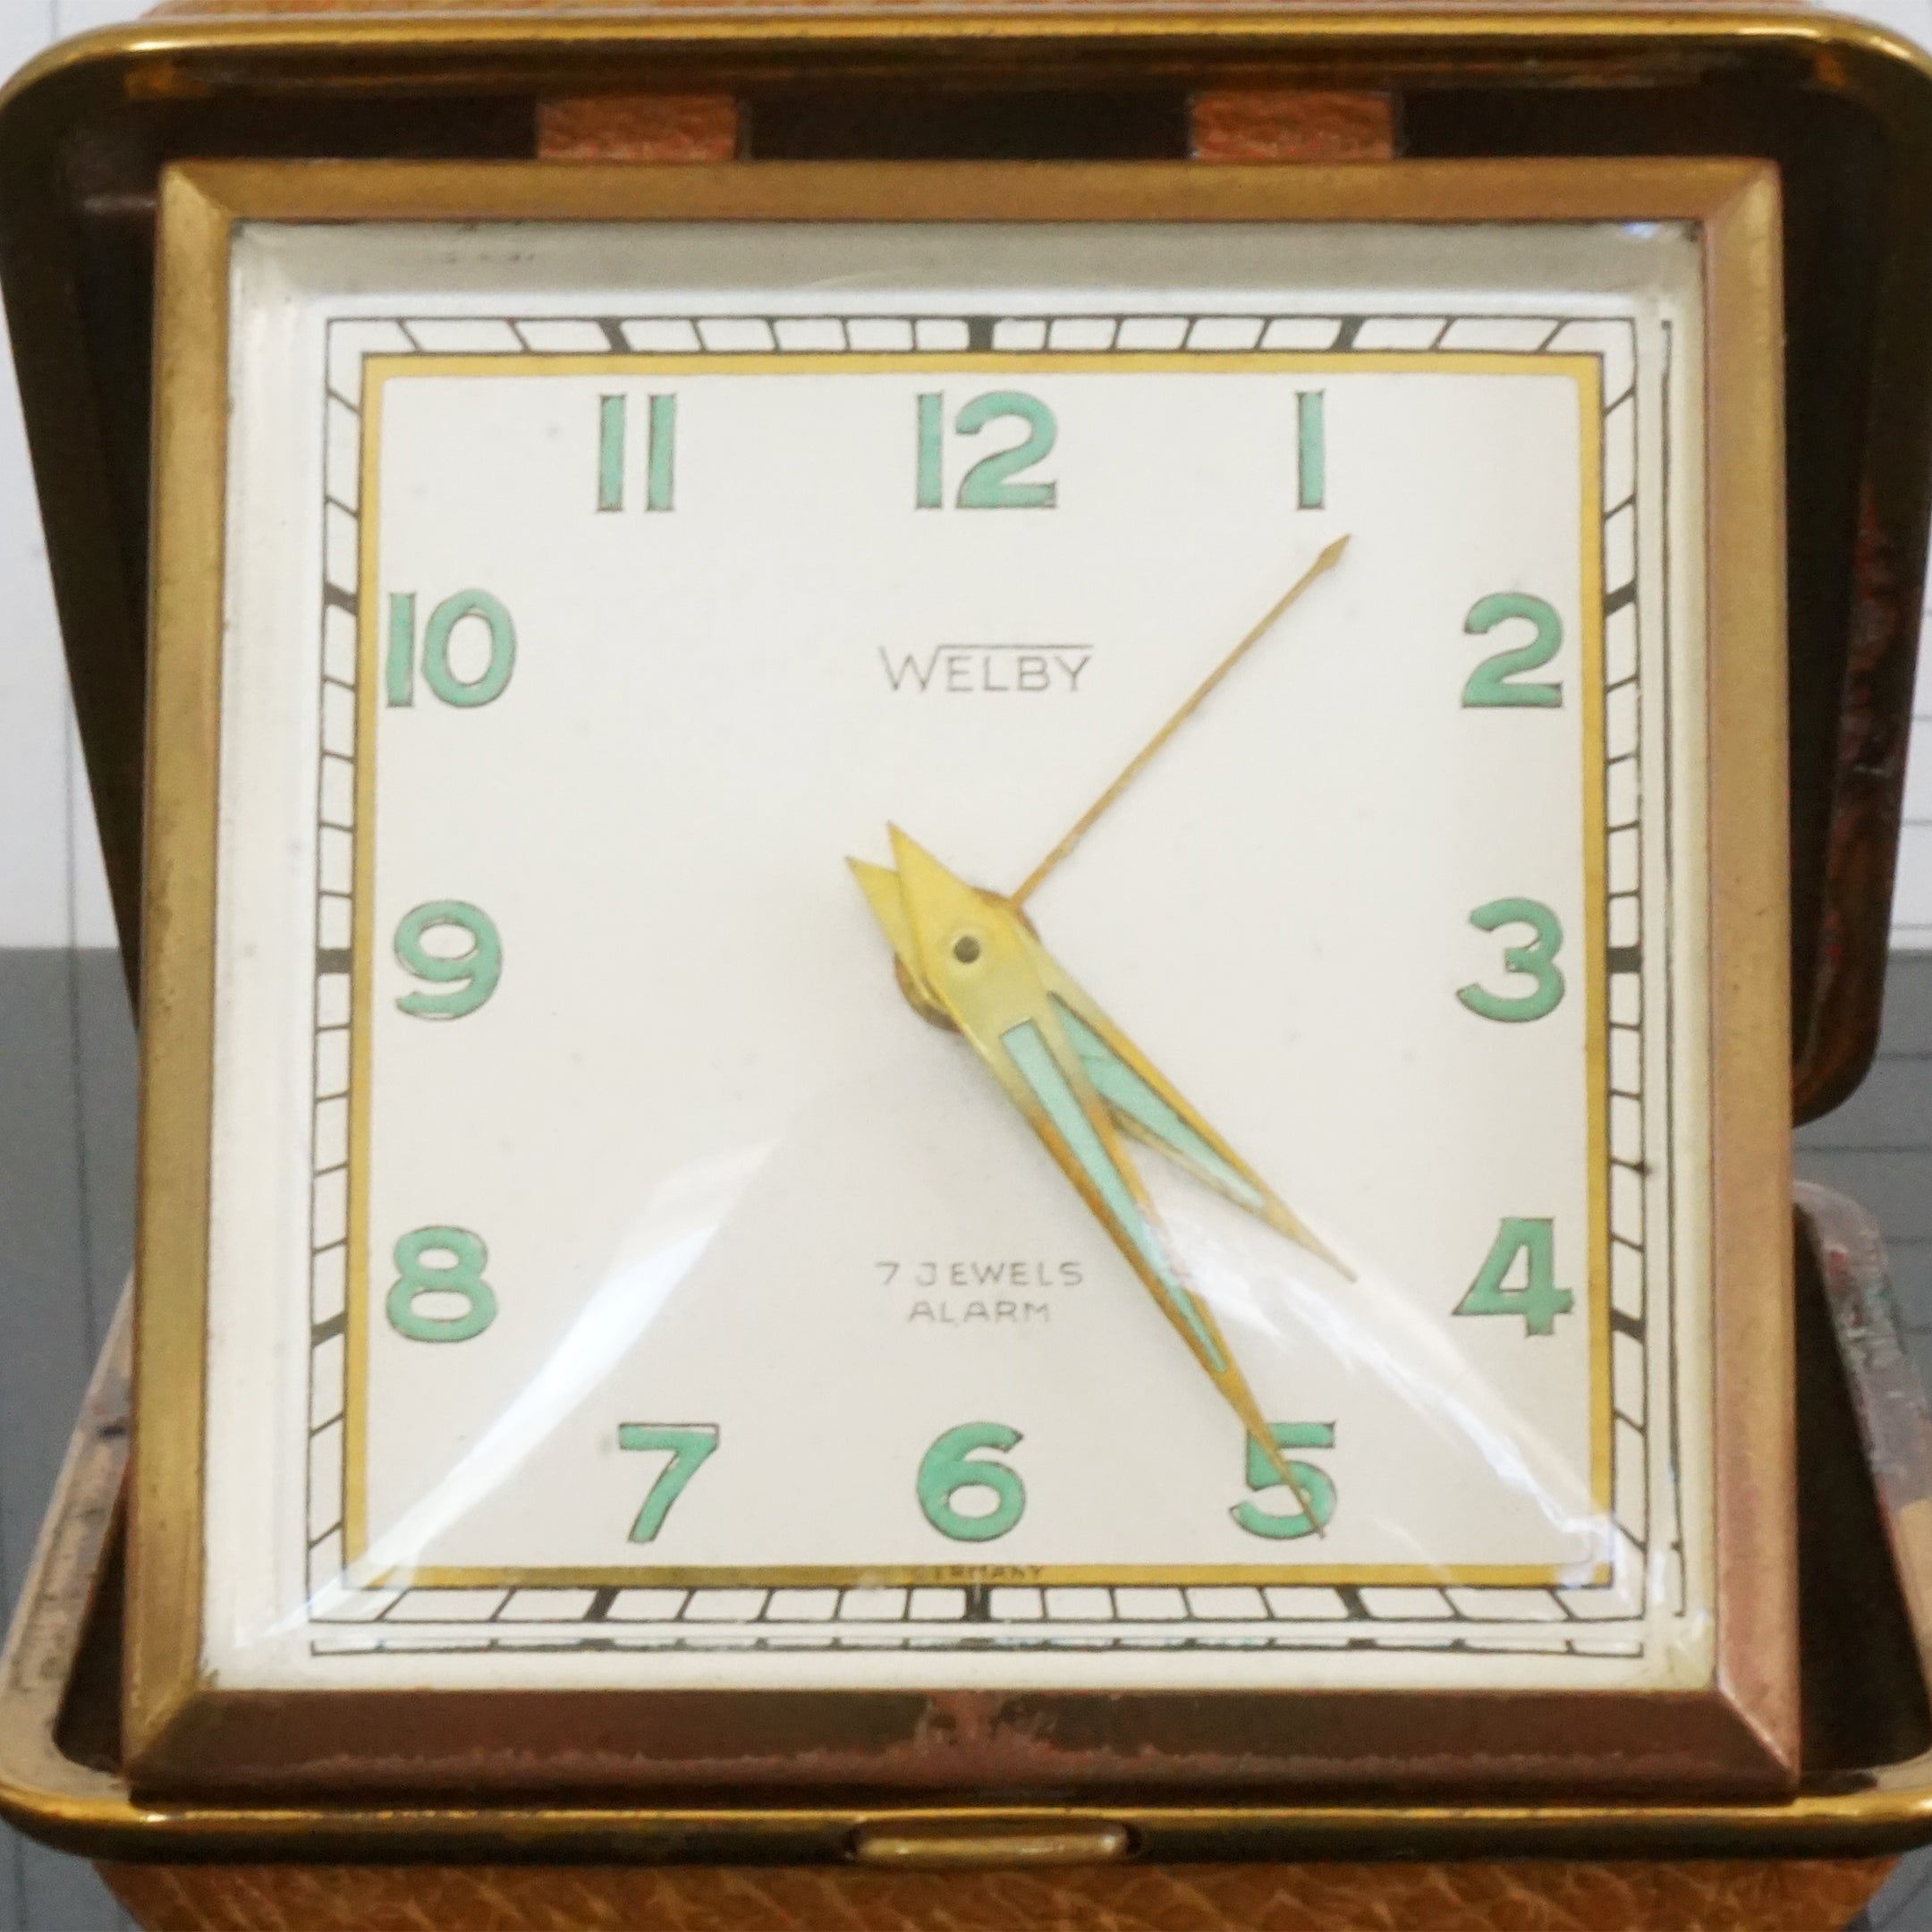 1960s Vintage WELBY Luminous Travel Alarm Clock in Case. Germany U.S. Zone.